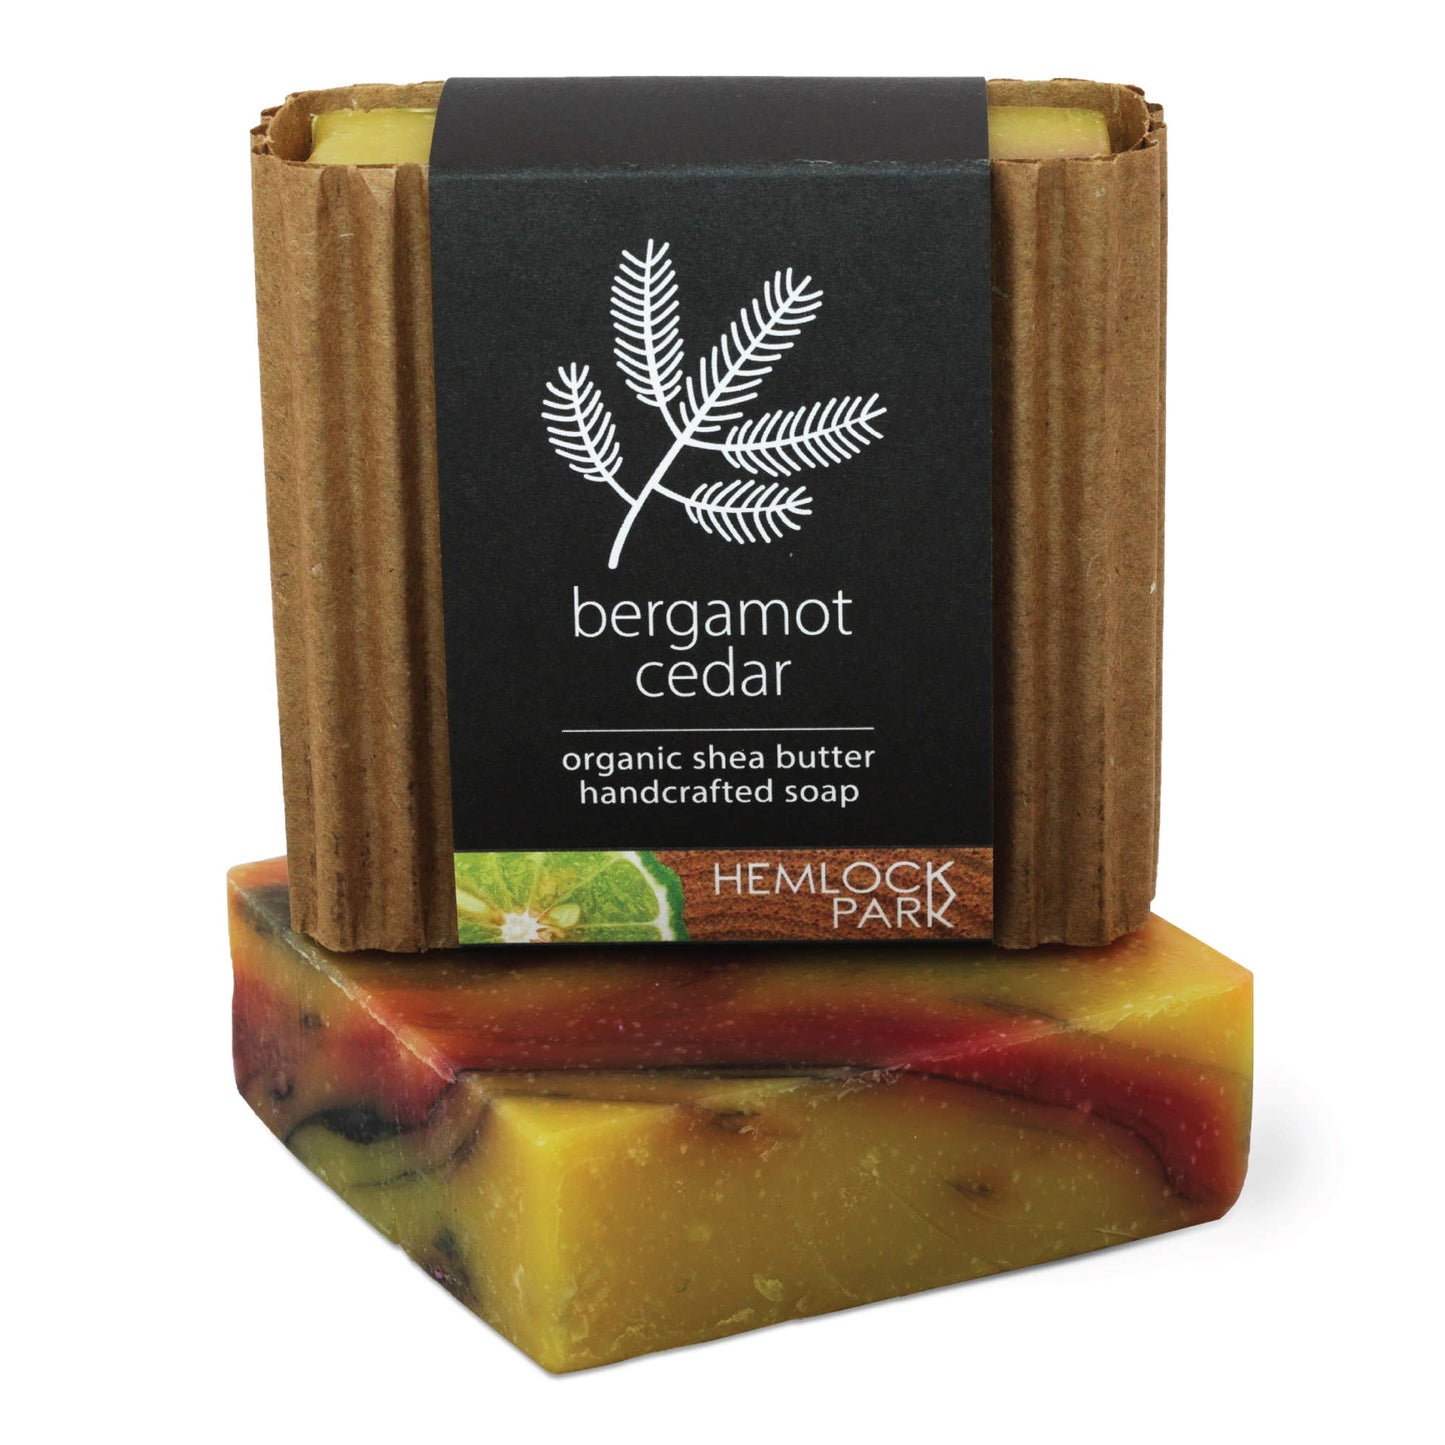 Organic Shea Butter Soap: Sea Salt Orchid